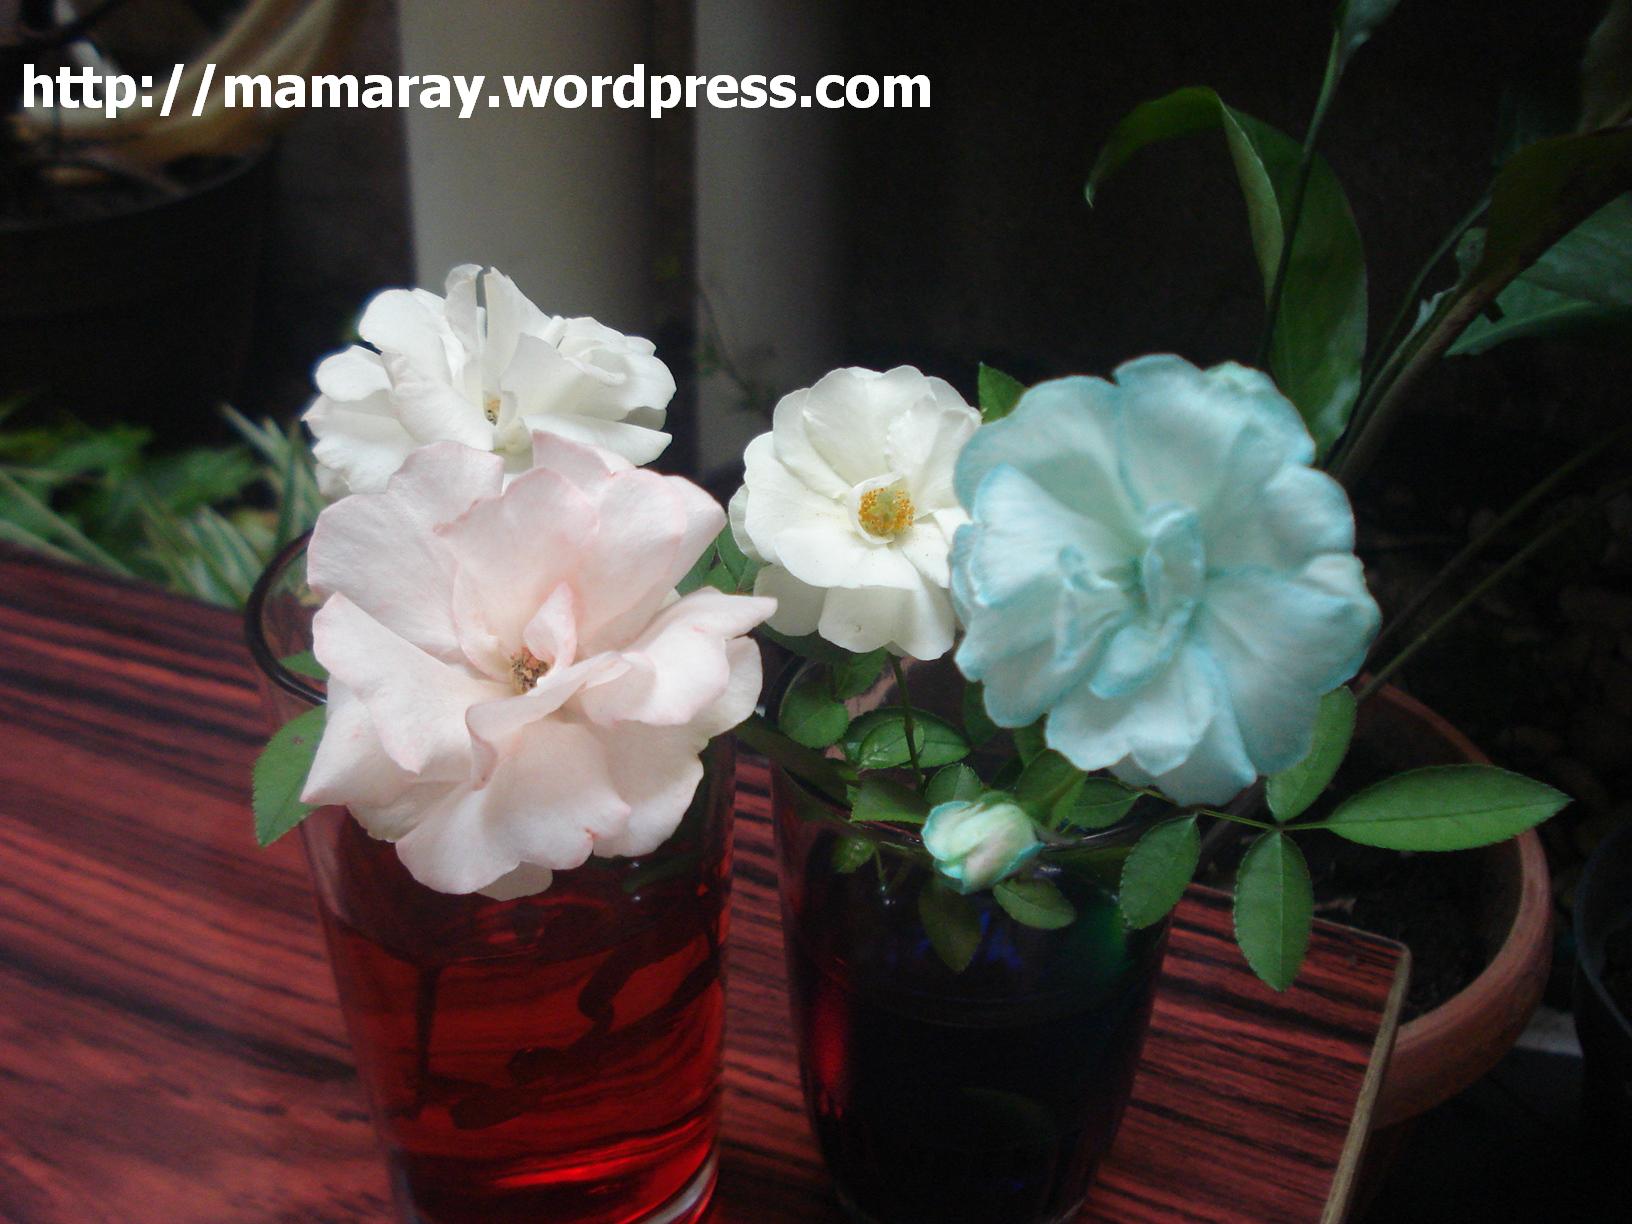 Percobaan Membuat Bunga  Berwarna  warni MamaRay s Blog